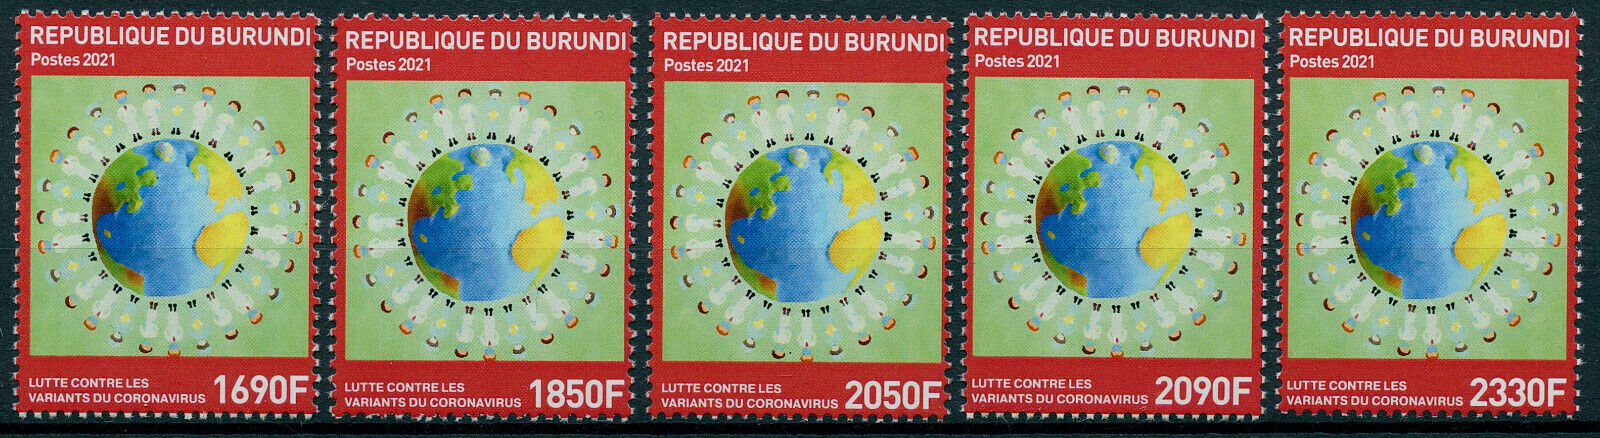 Burundi 2021 MNH Medical Stamps Fight Against Corona Variants Covid Covid-19 5v Set